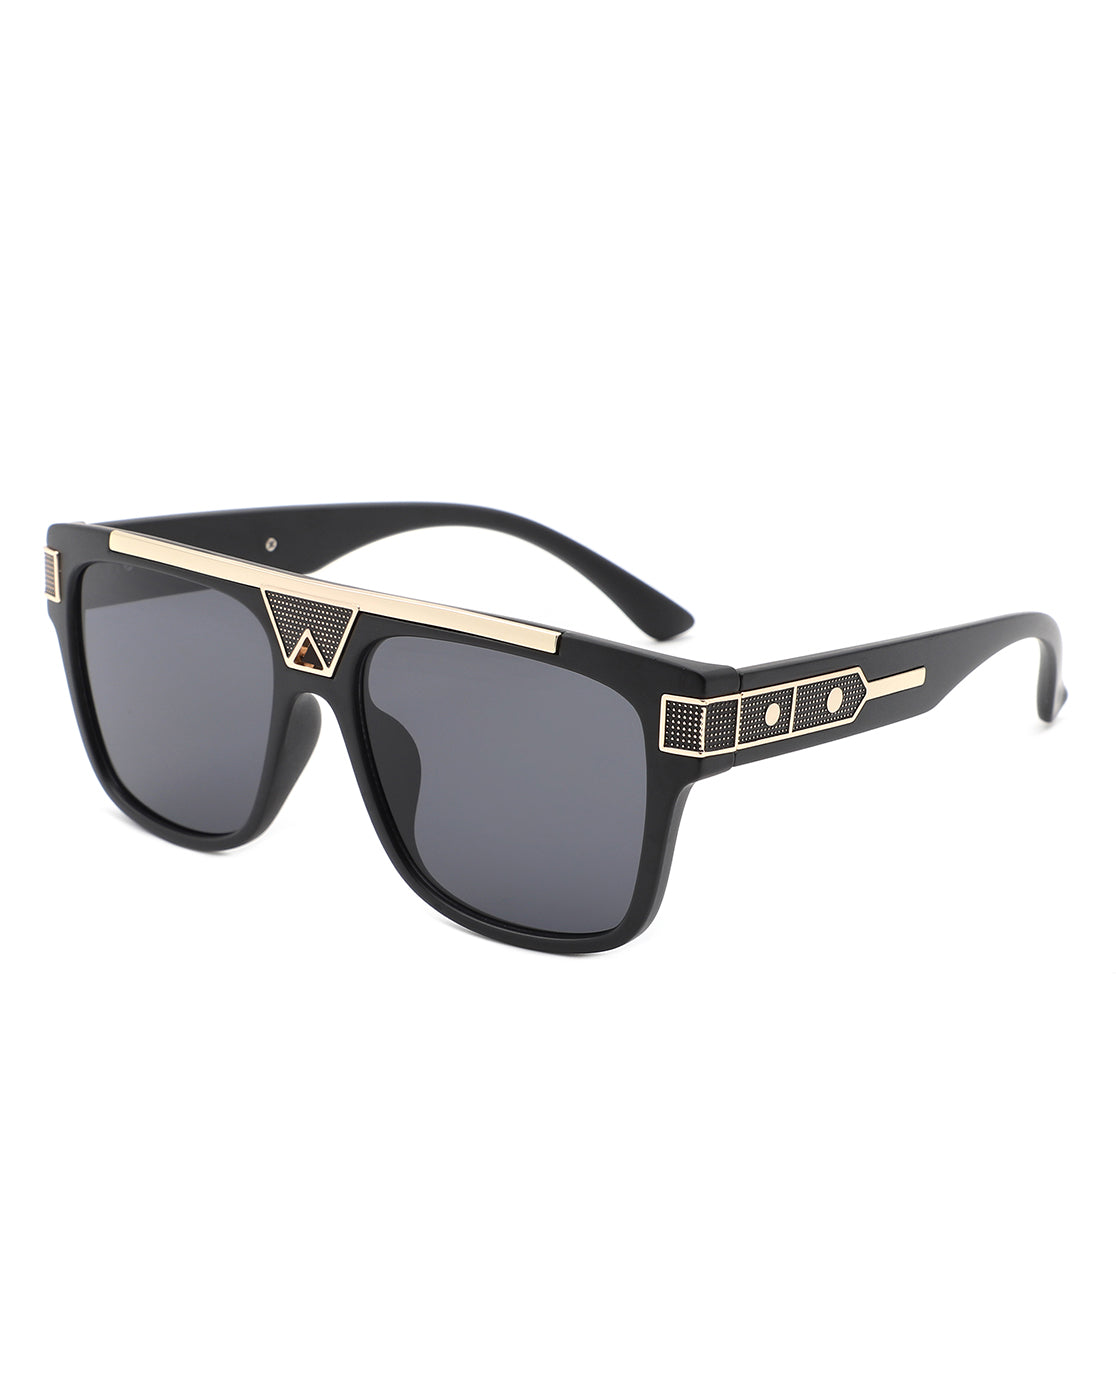 Qepruerus - Aviator Style Retro Square Fashion Sunglasses